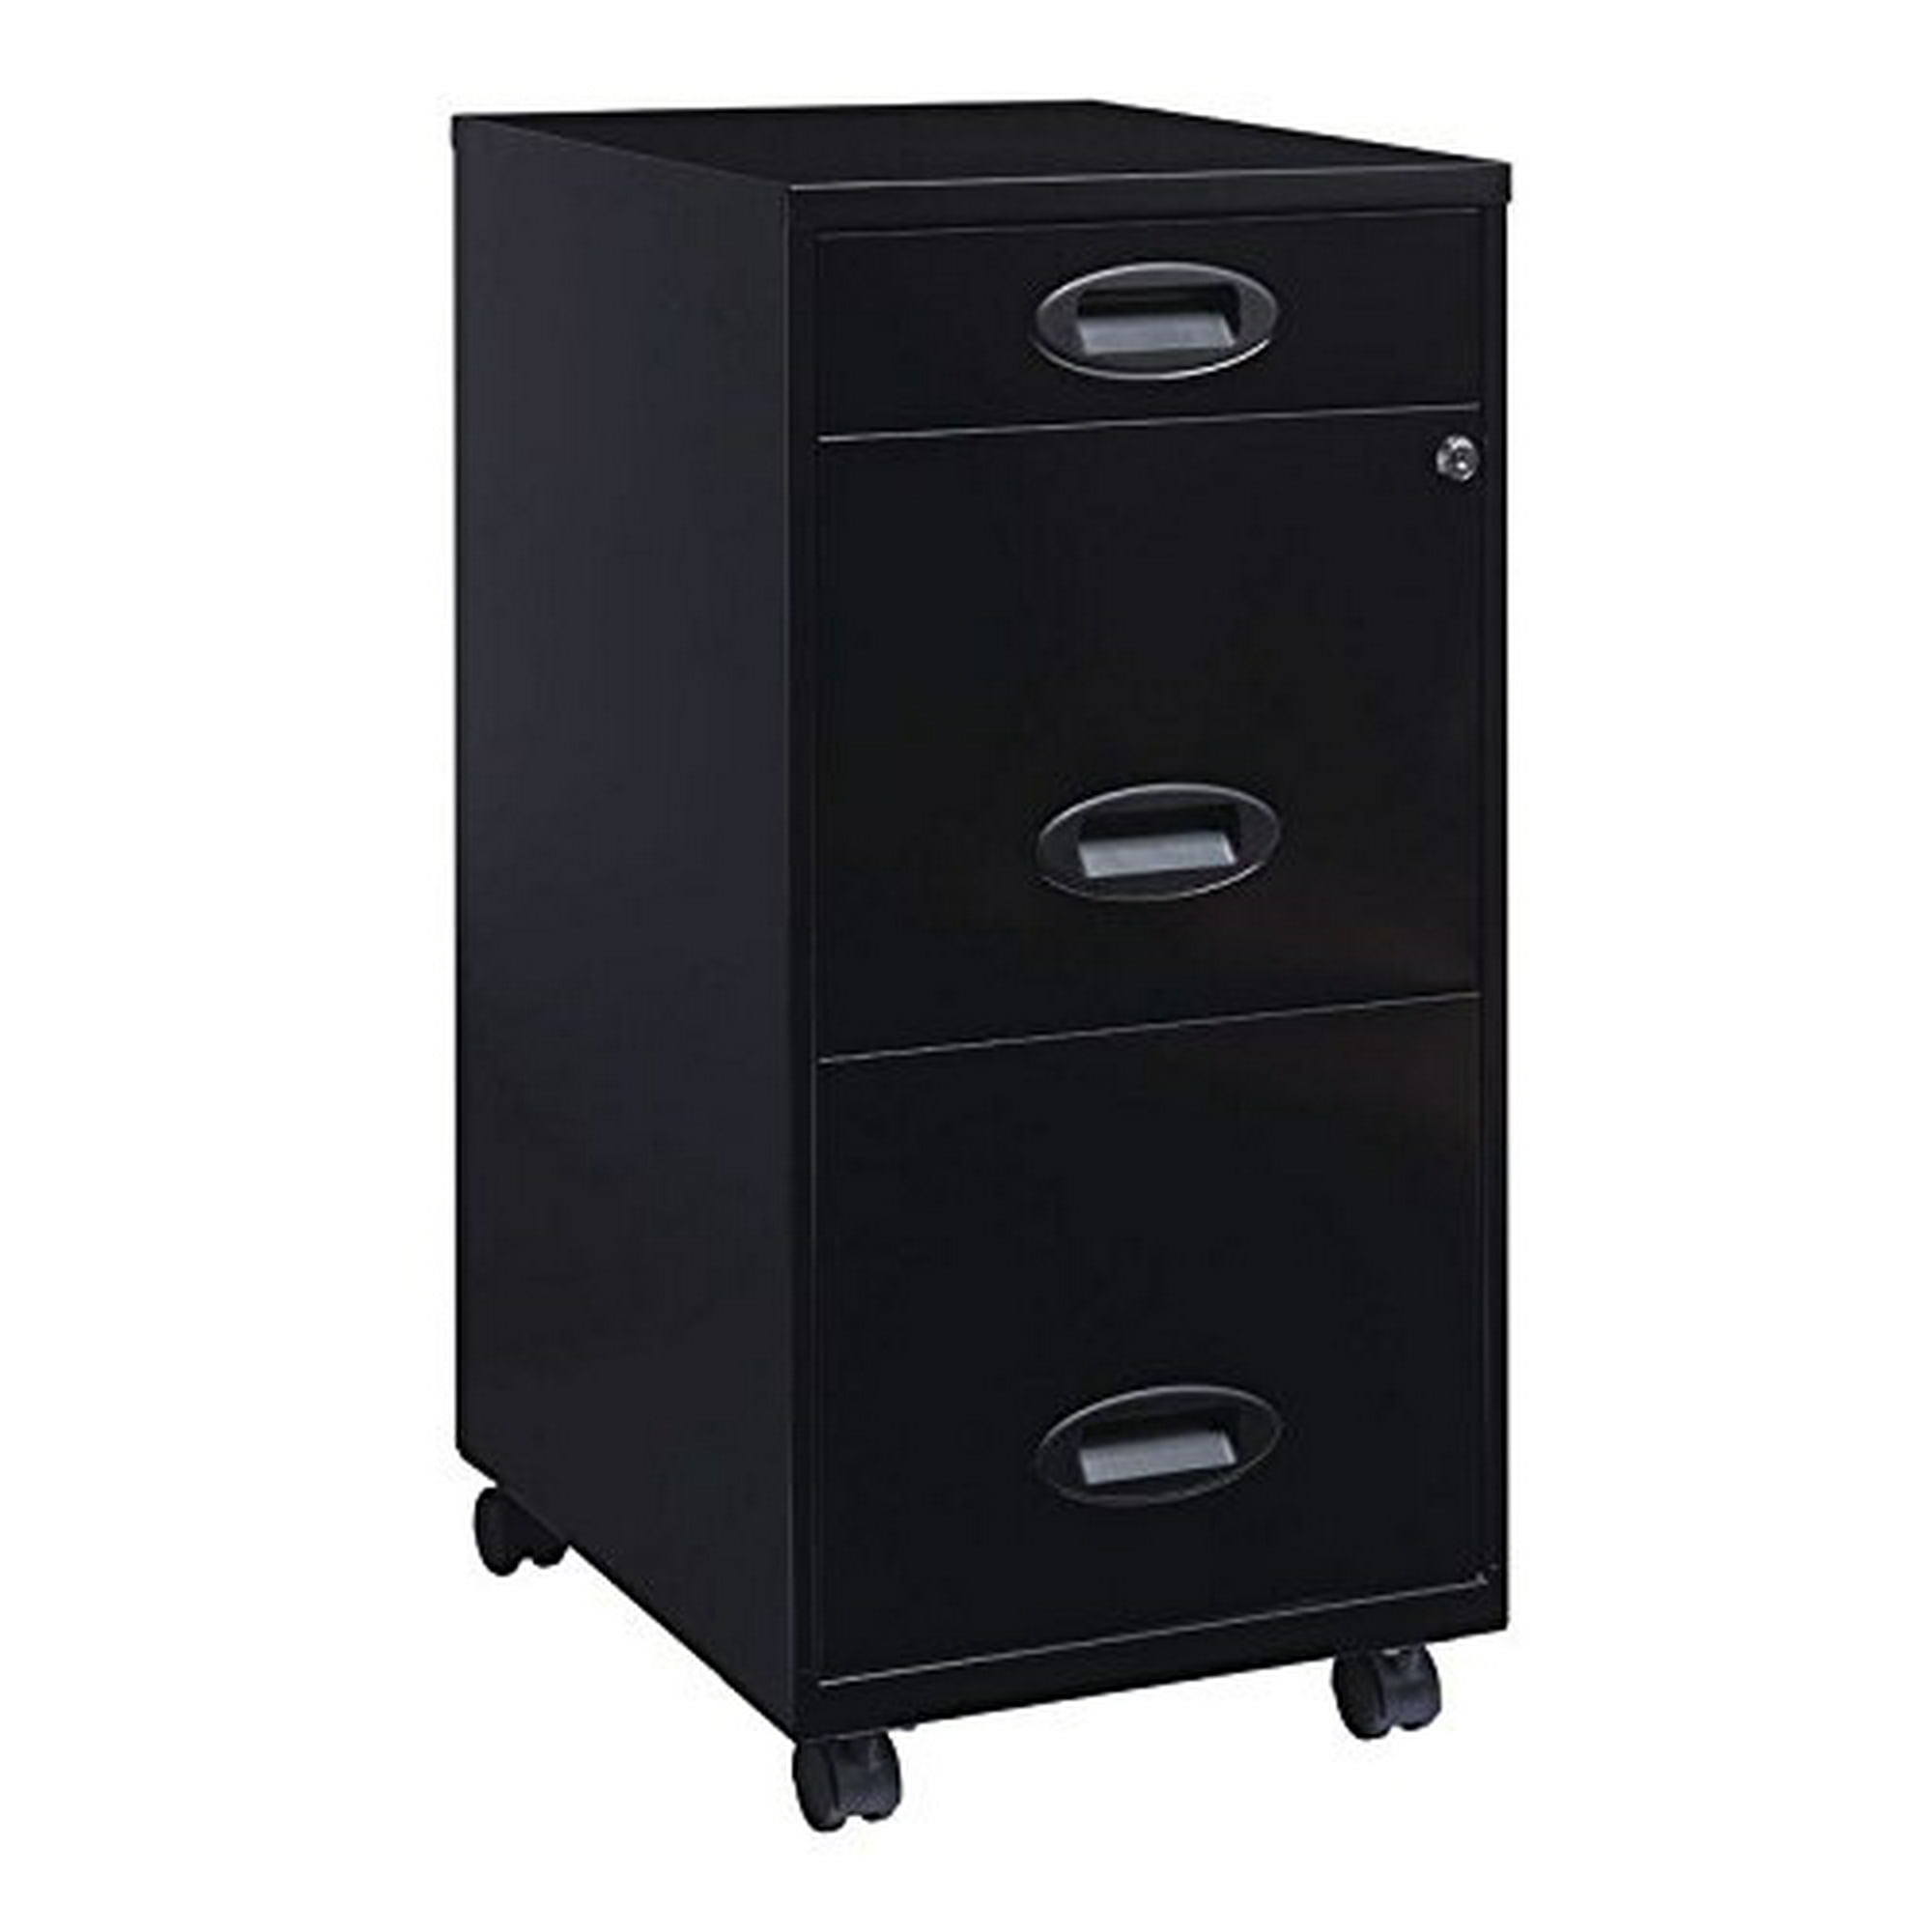 Hirsh Industries Soho Mobile 3 Drawer File Cabinet In Black